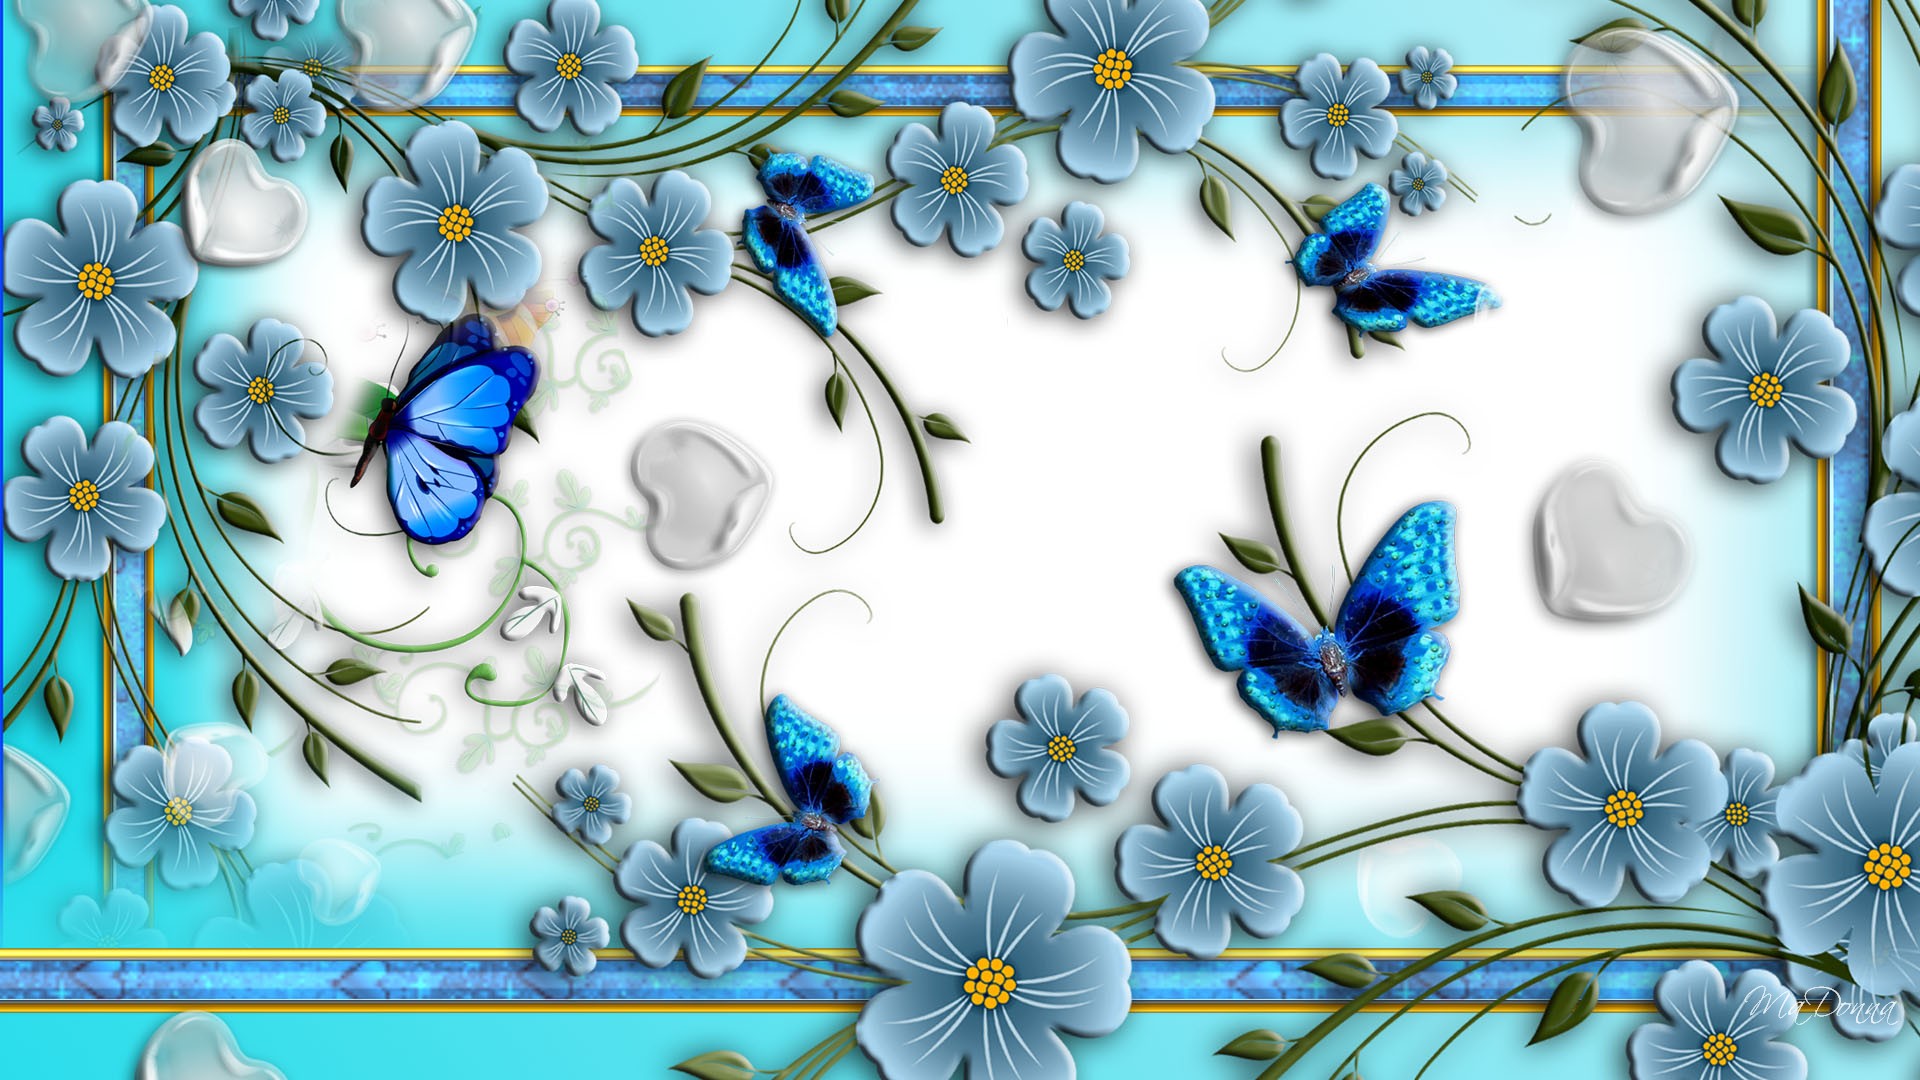 Abstract Floral Desktop Wallpapers